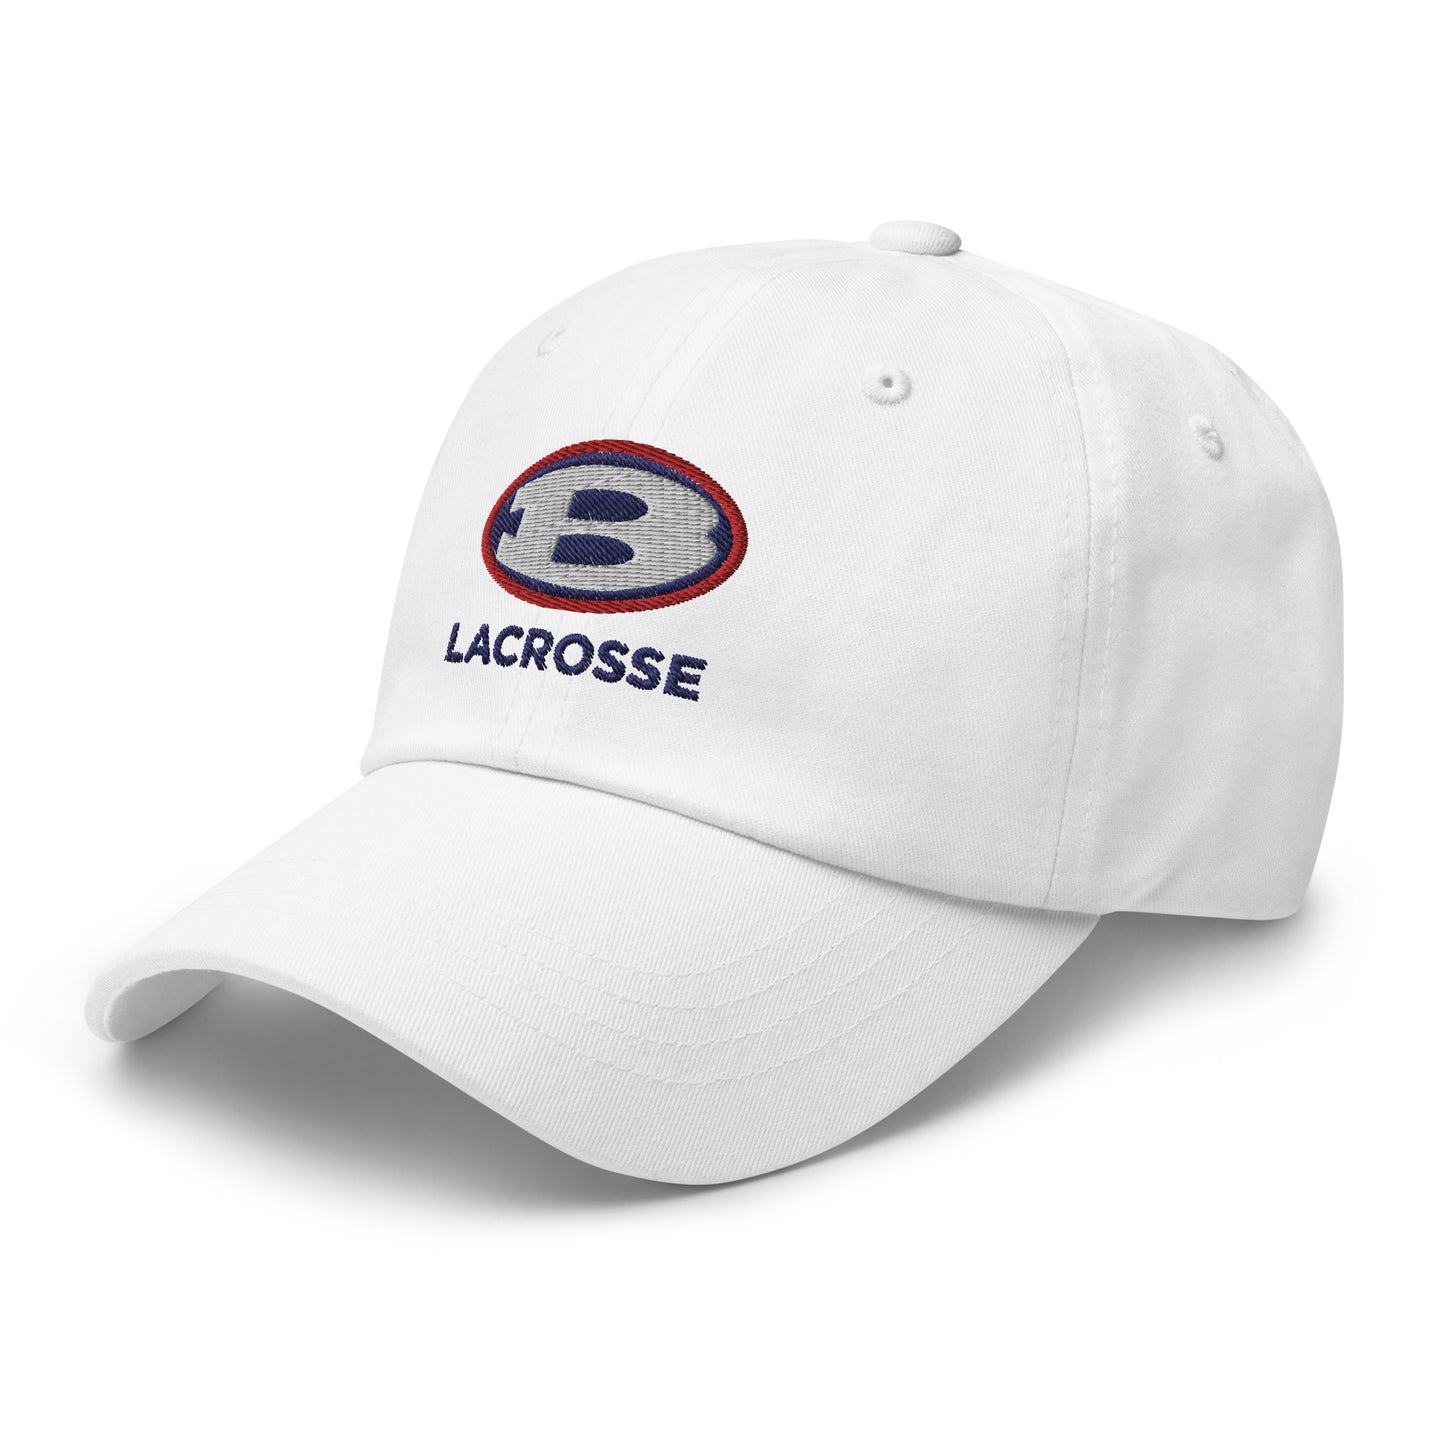 Bellport Lacrosse - Dad hat